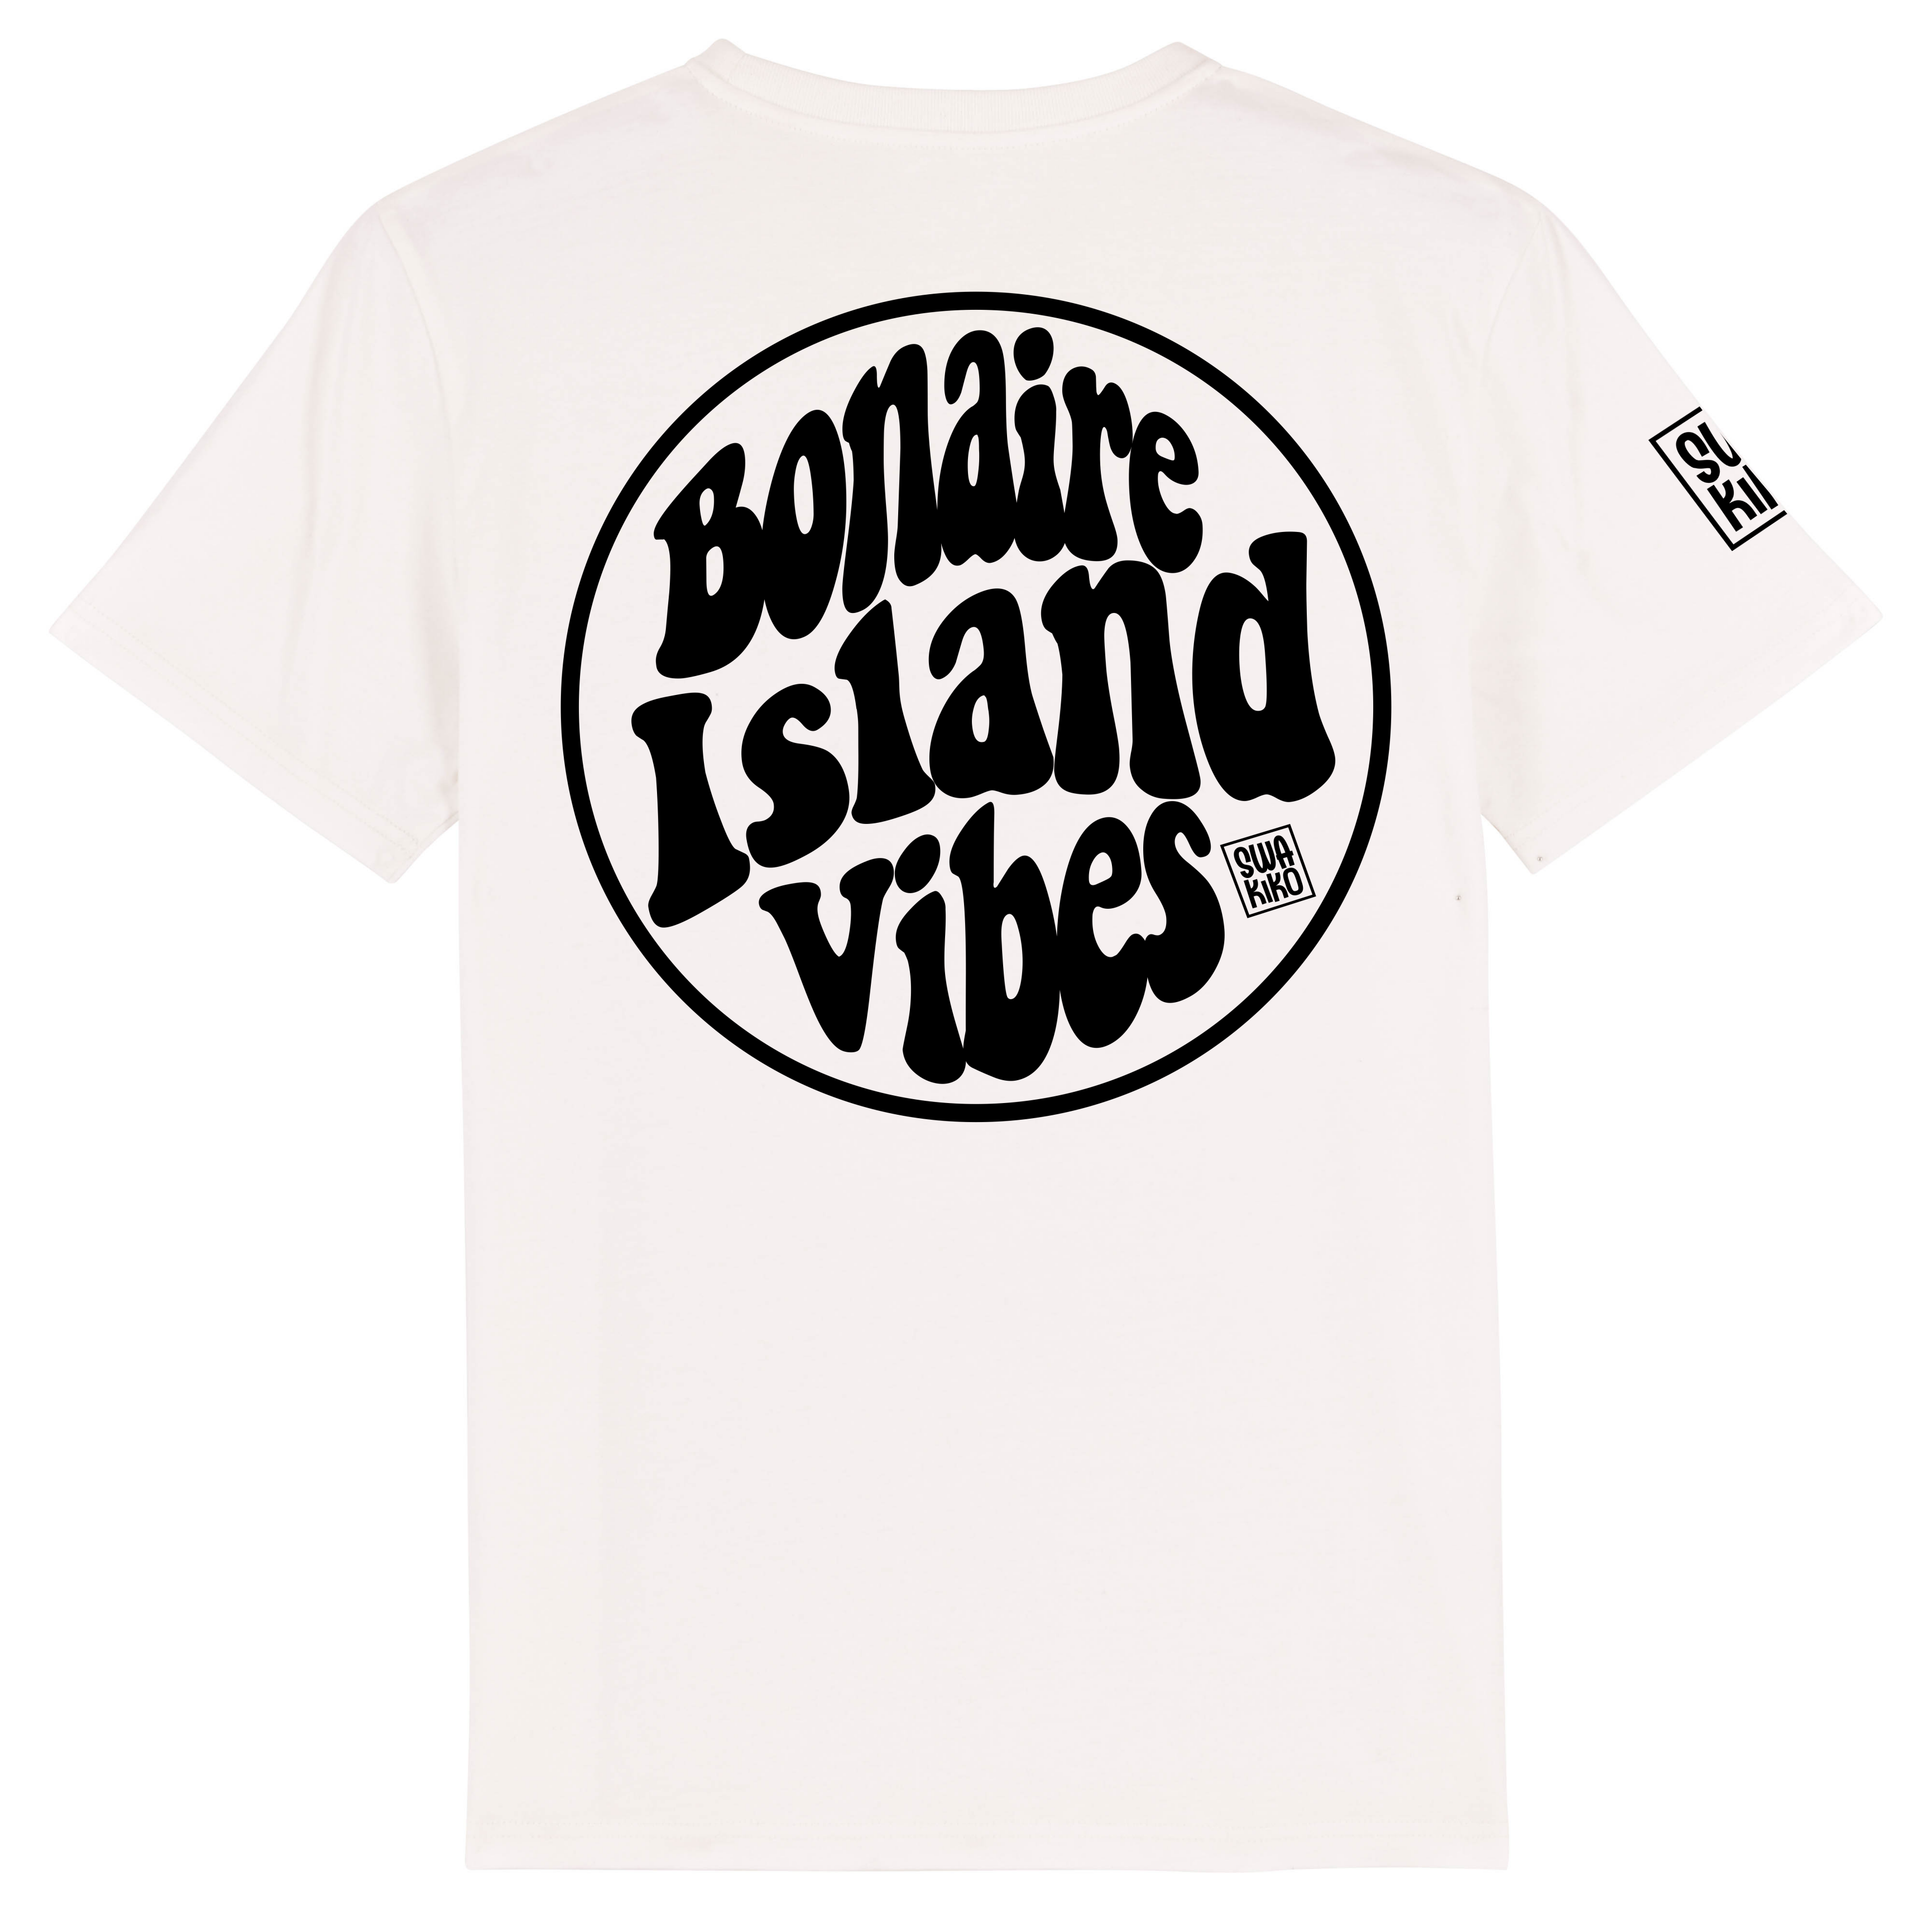 Bonaire Island Vibes logo T-shirt front, white